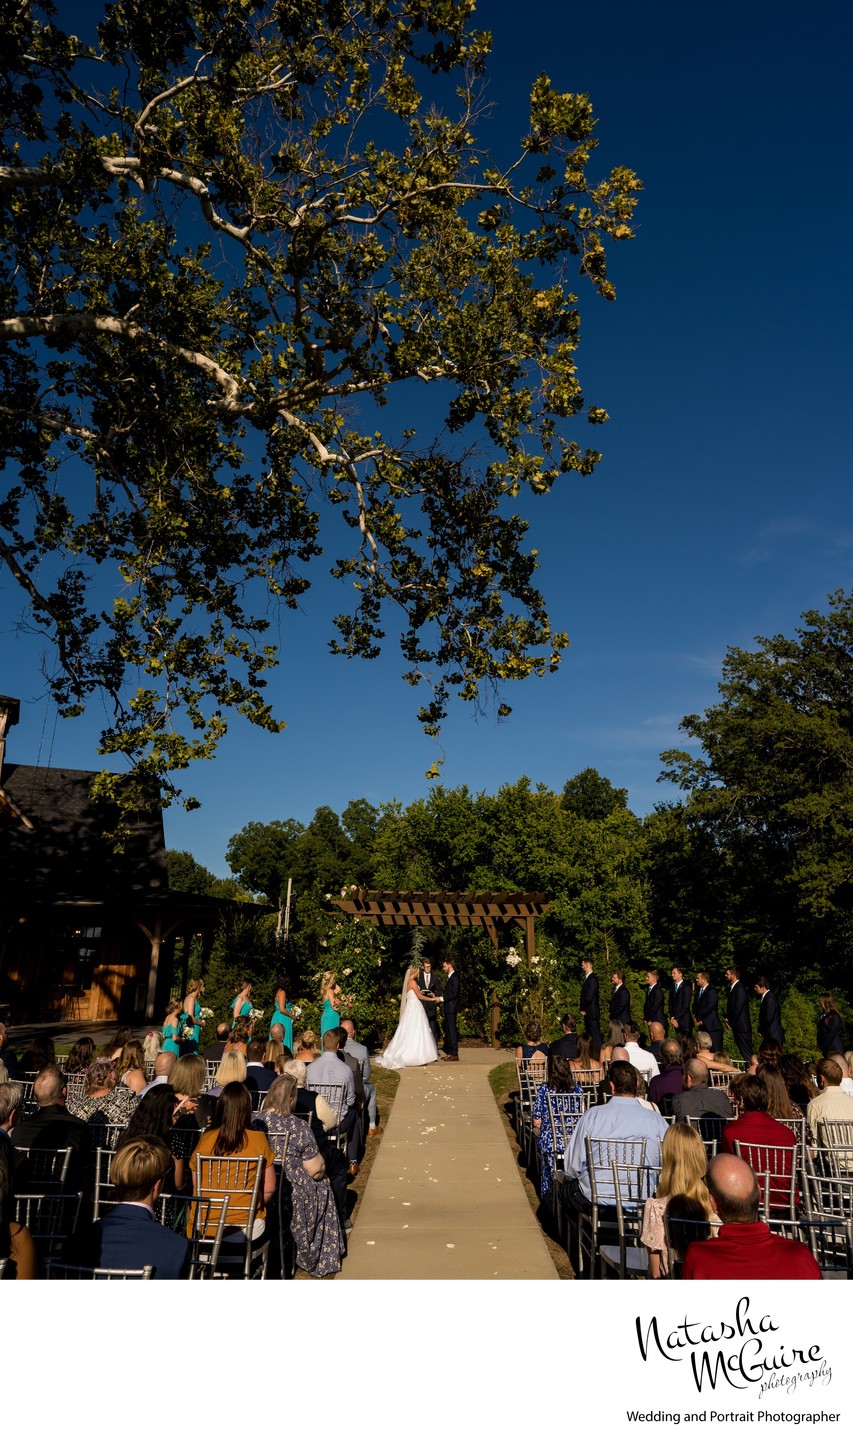 Outdoor wedding in September near St Louis